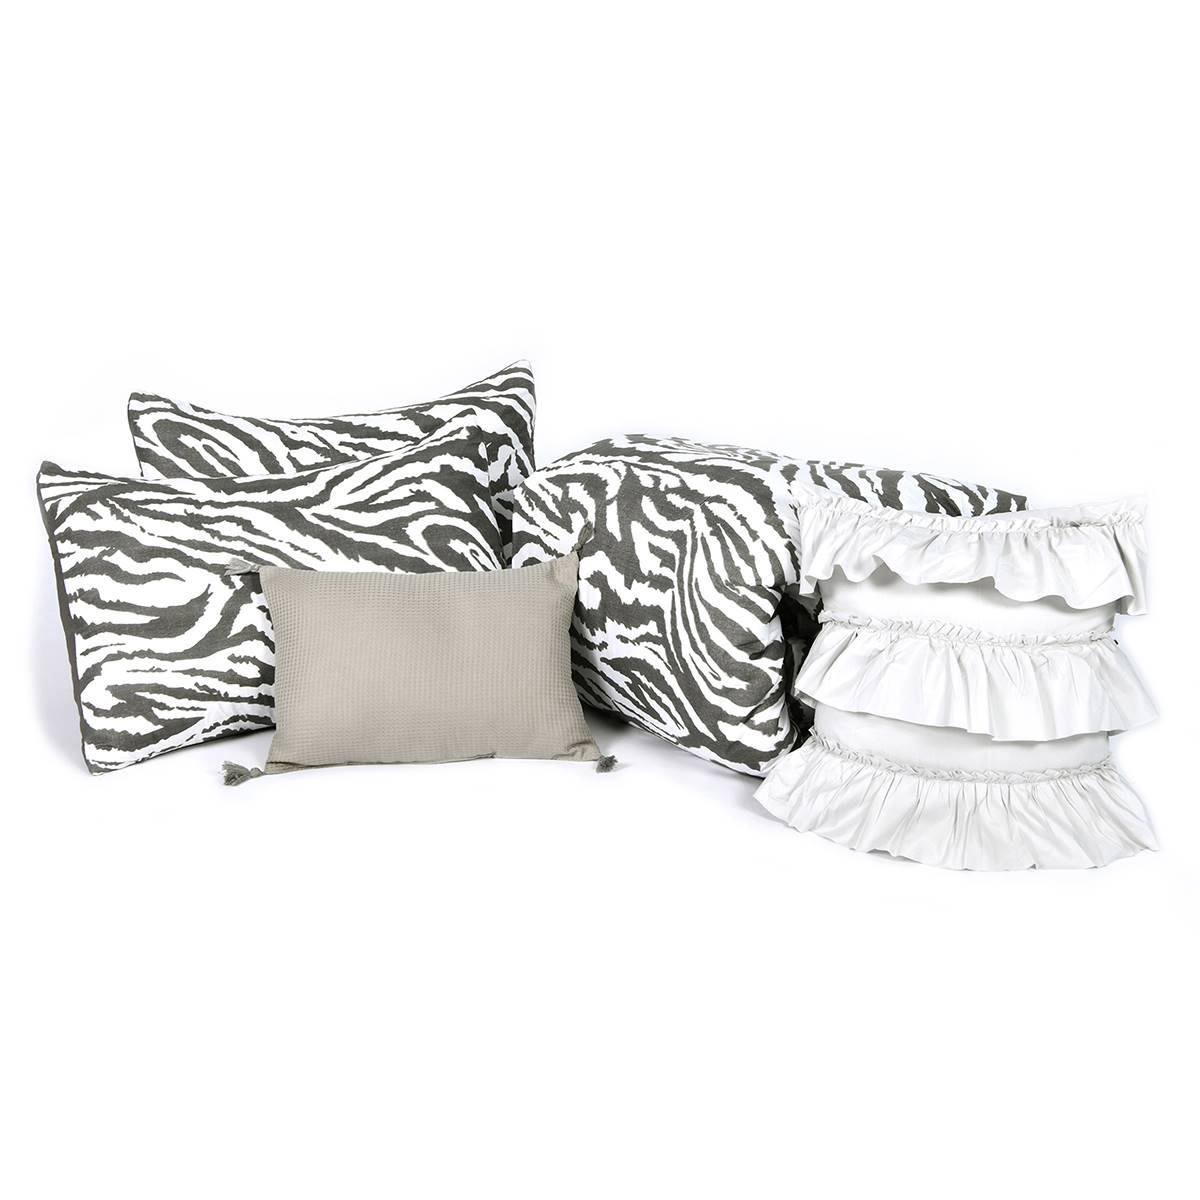 EnvioHome 100% Polyester Zebra Reversible Comforter Set